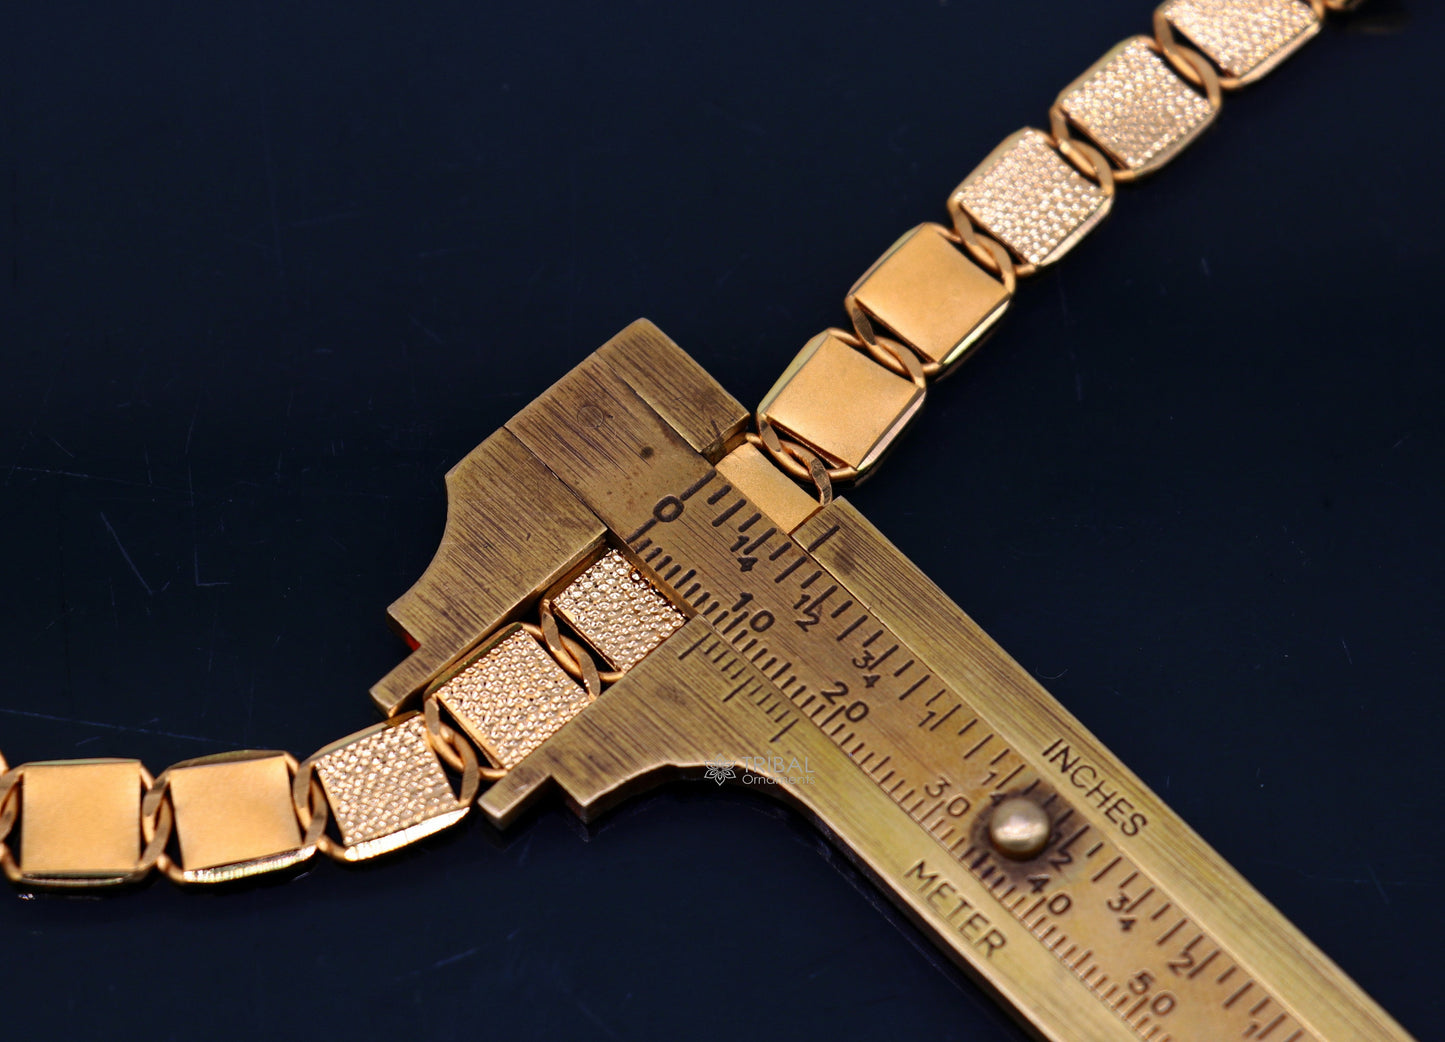 Hallmarked 22kt yellow gold handmade solid gold bar Royal nawabi Chain or Bracelet fabulous diamond cut design men's jewelry gbr42 - TRIBAL ORNAMENTS